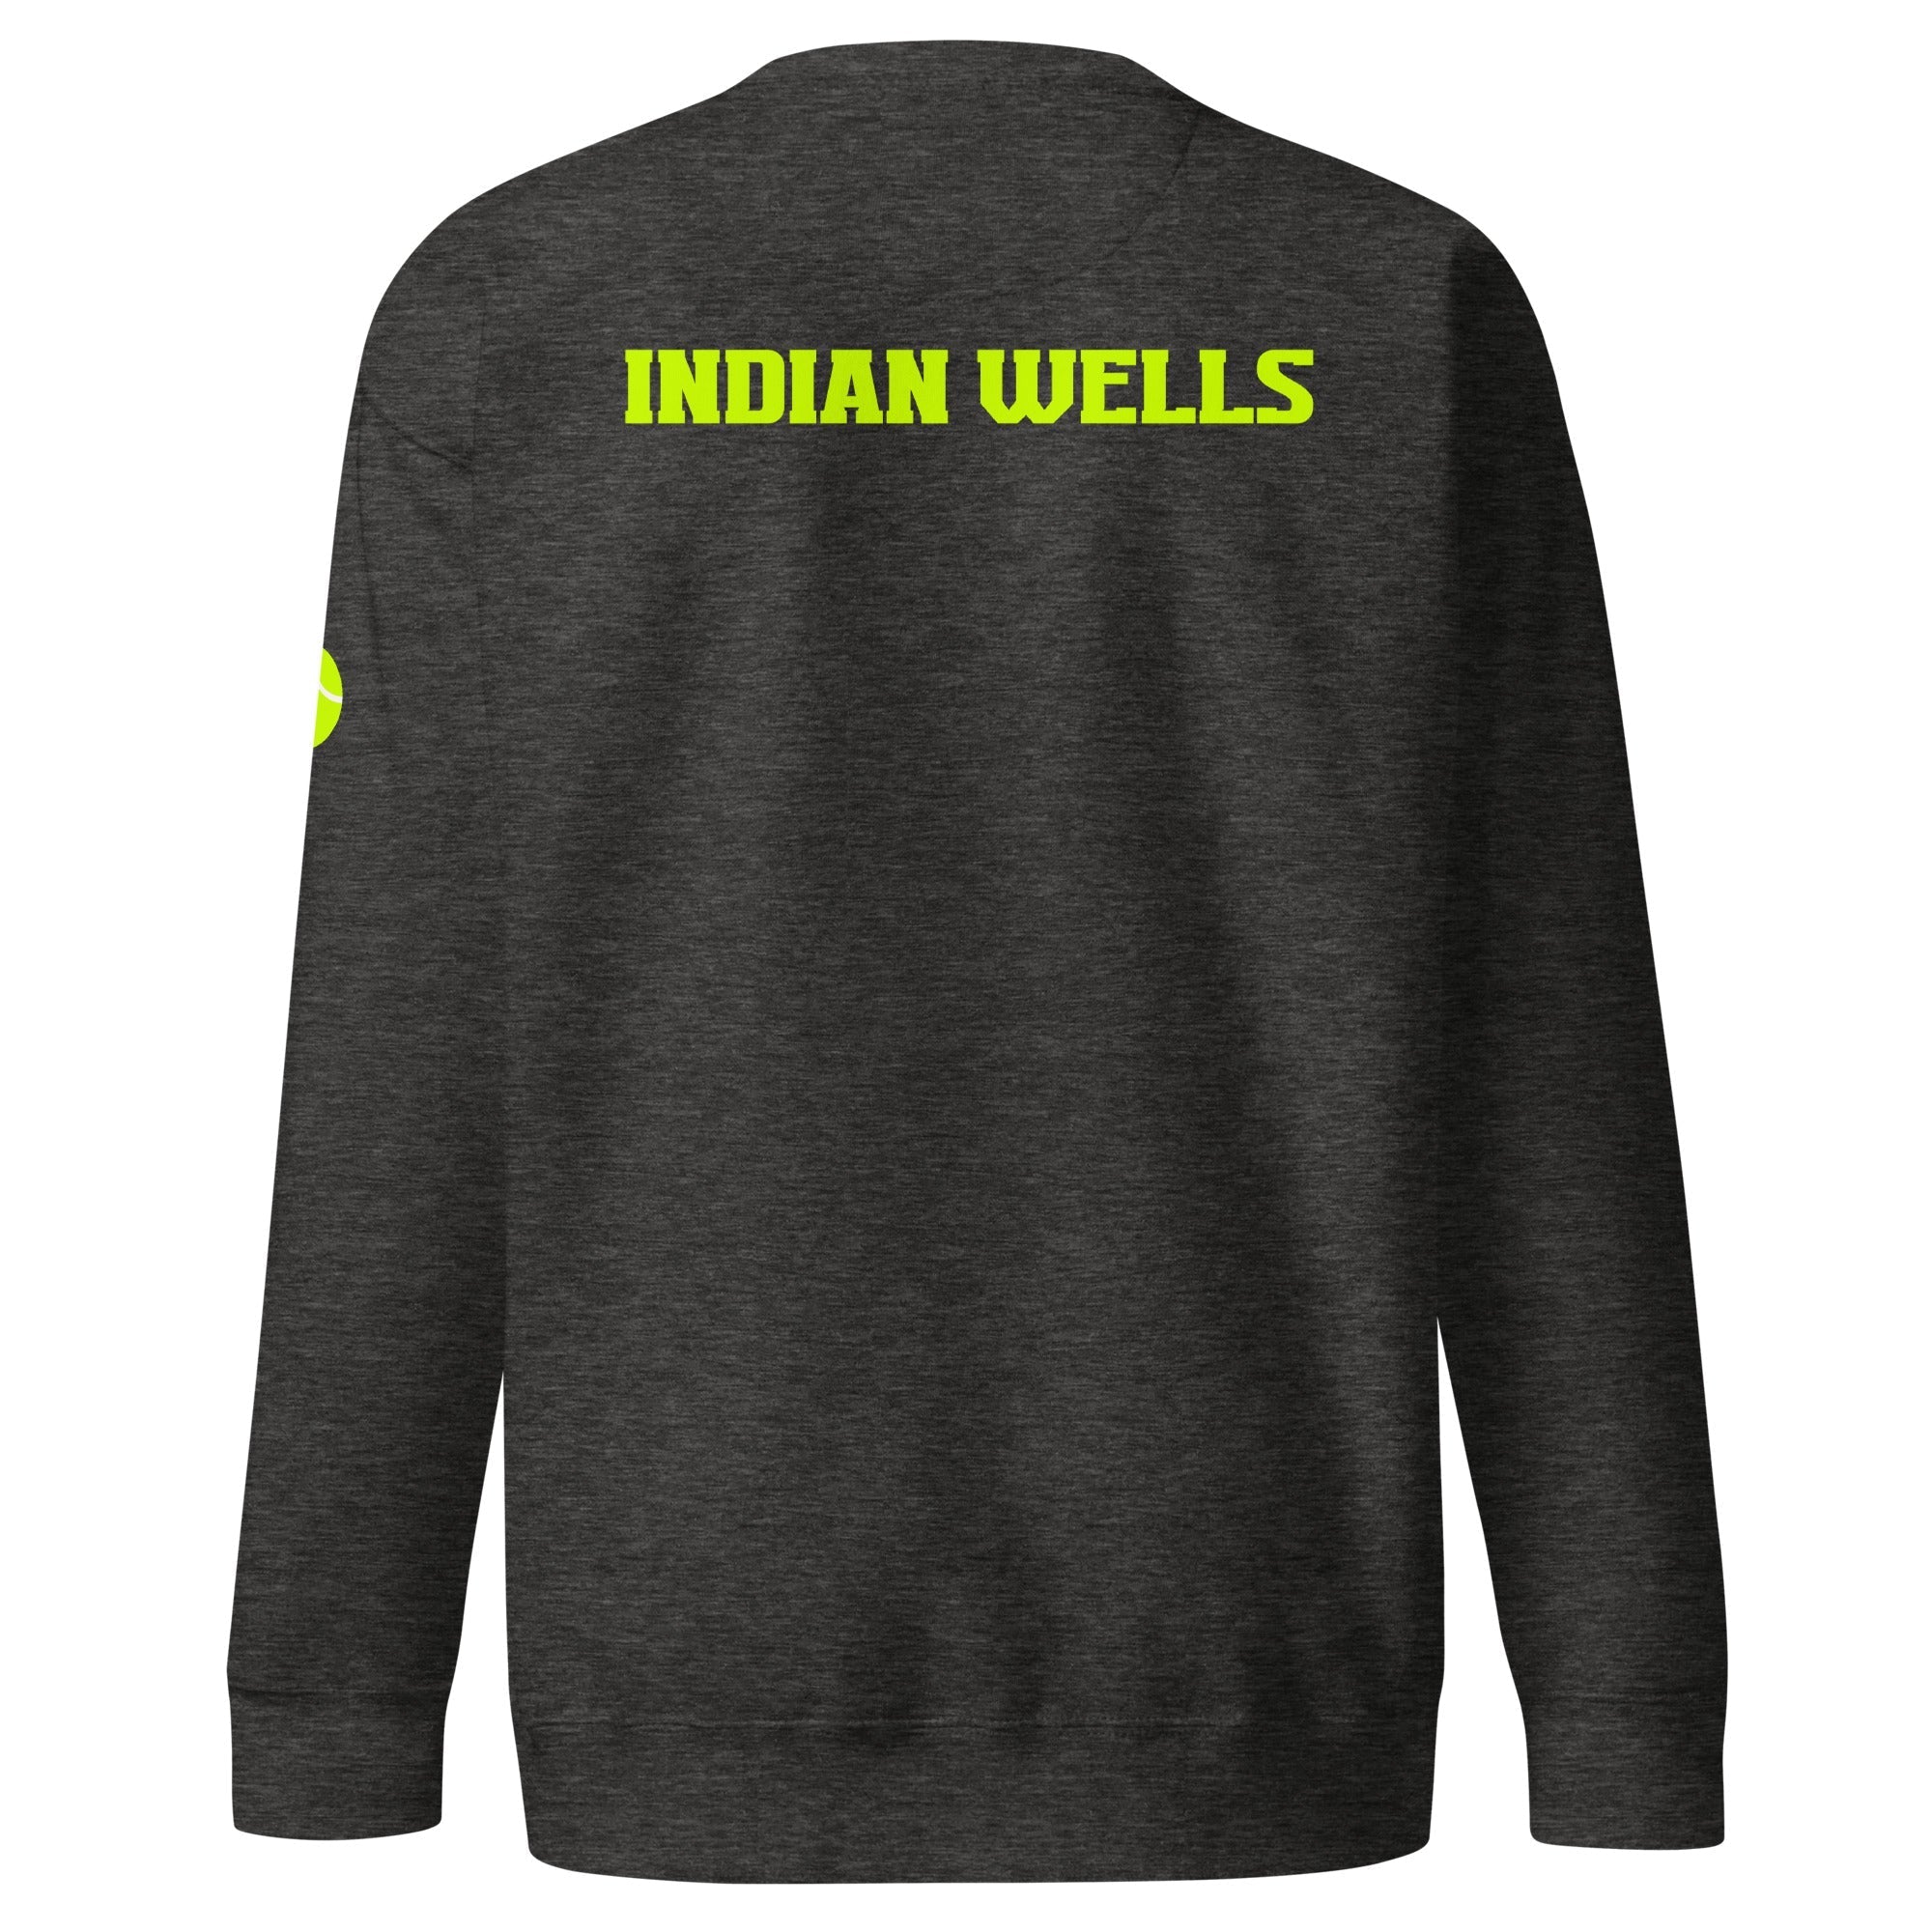 Unisex Premium Sweatshirt - Tennis Masters Indian Wells - GRAPHIC T-SHIRTS